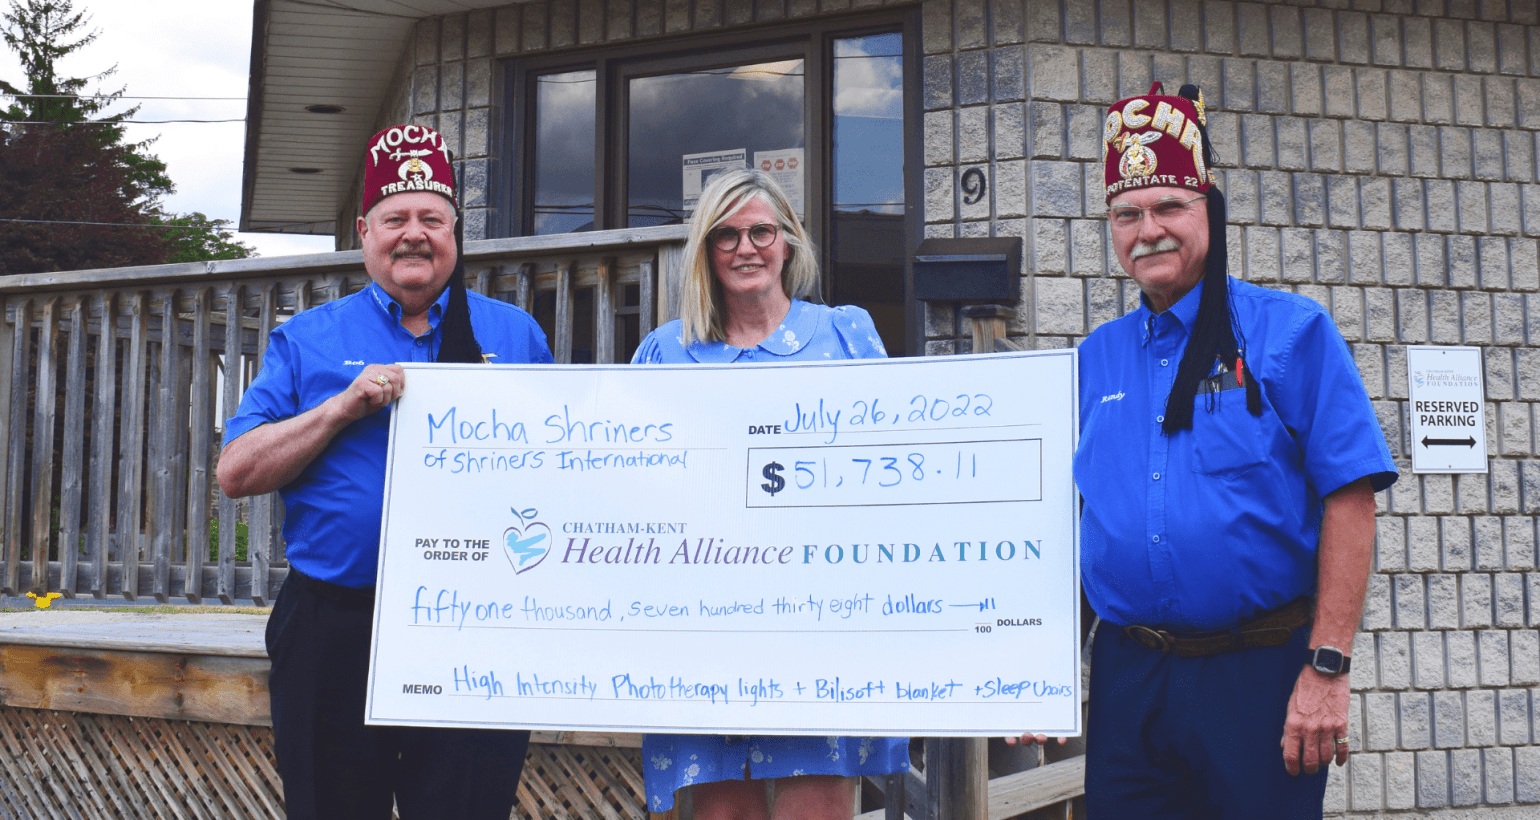 Mocha Shriners donate $51,738.11 towards the purchase of vital equipment for CKHA Pediatrics Unit